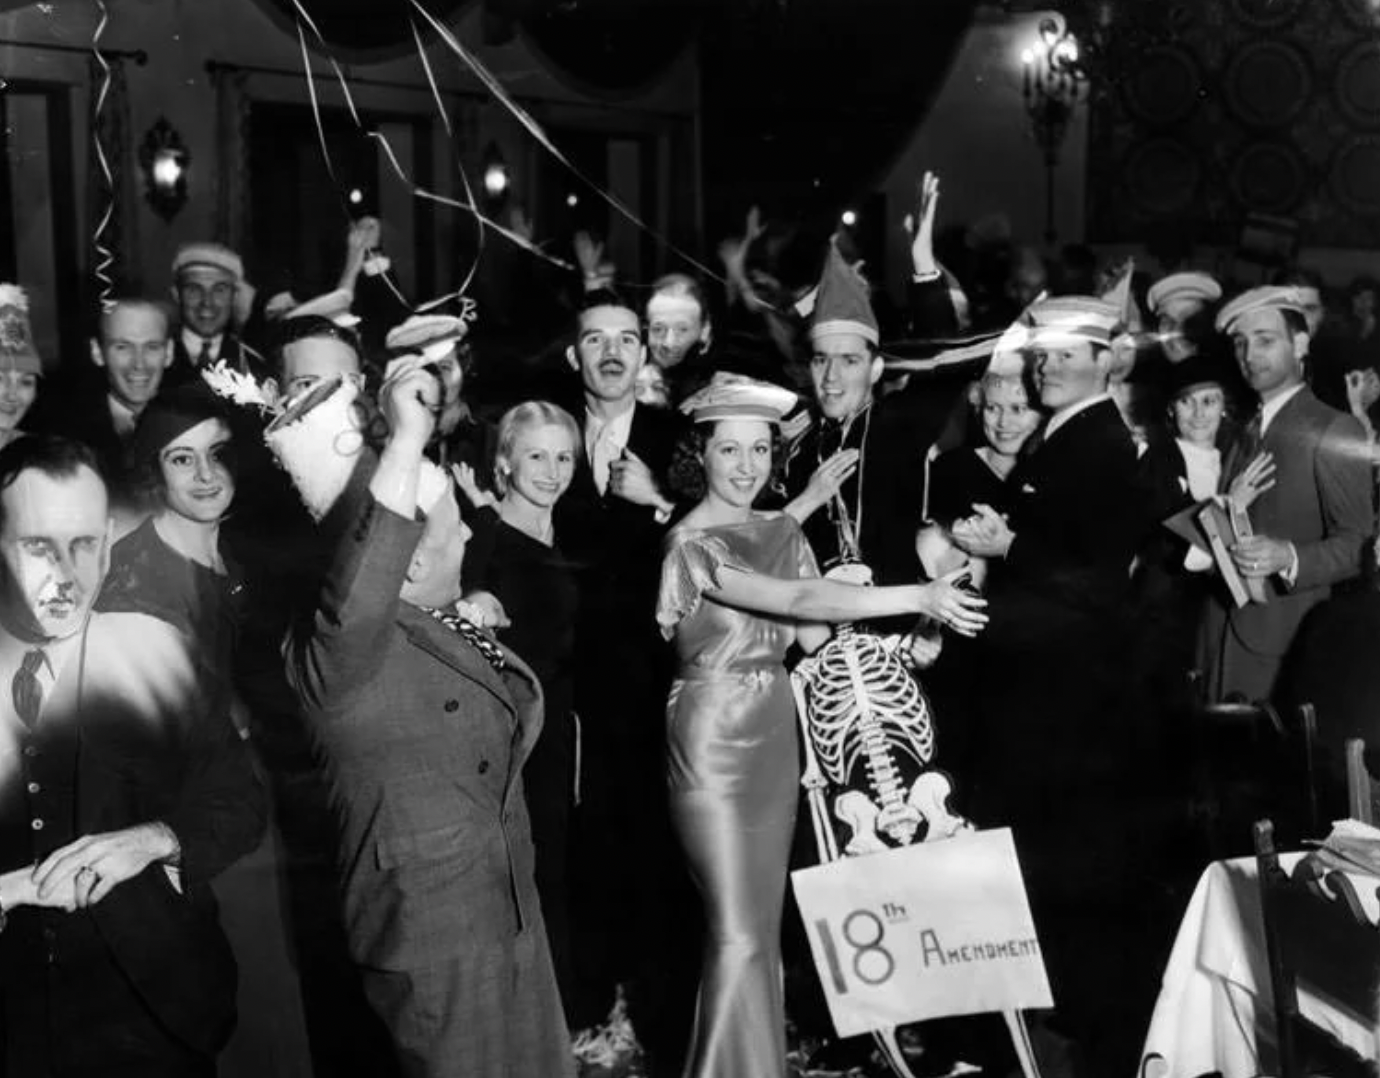 1930s party scene - 18 Anca